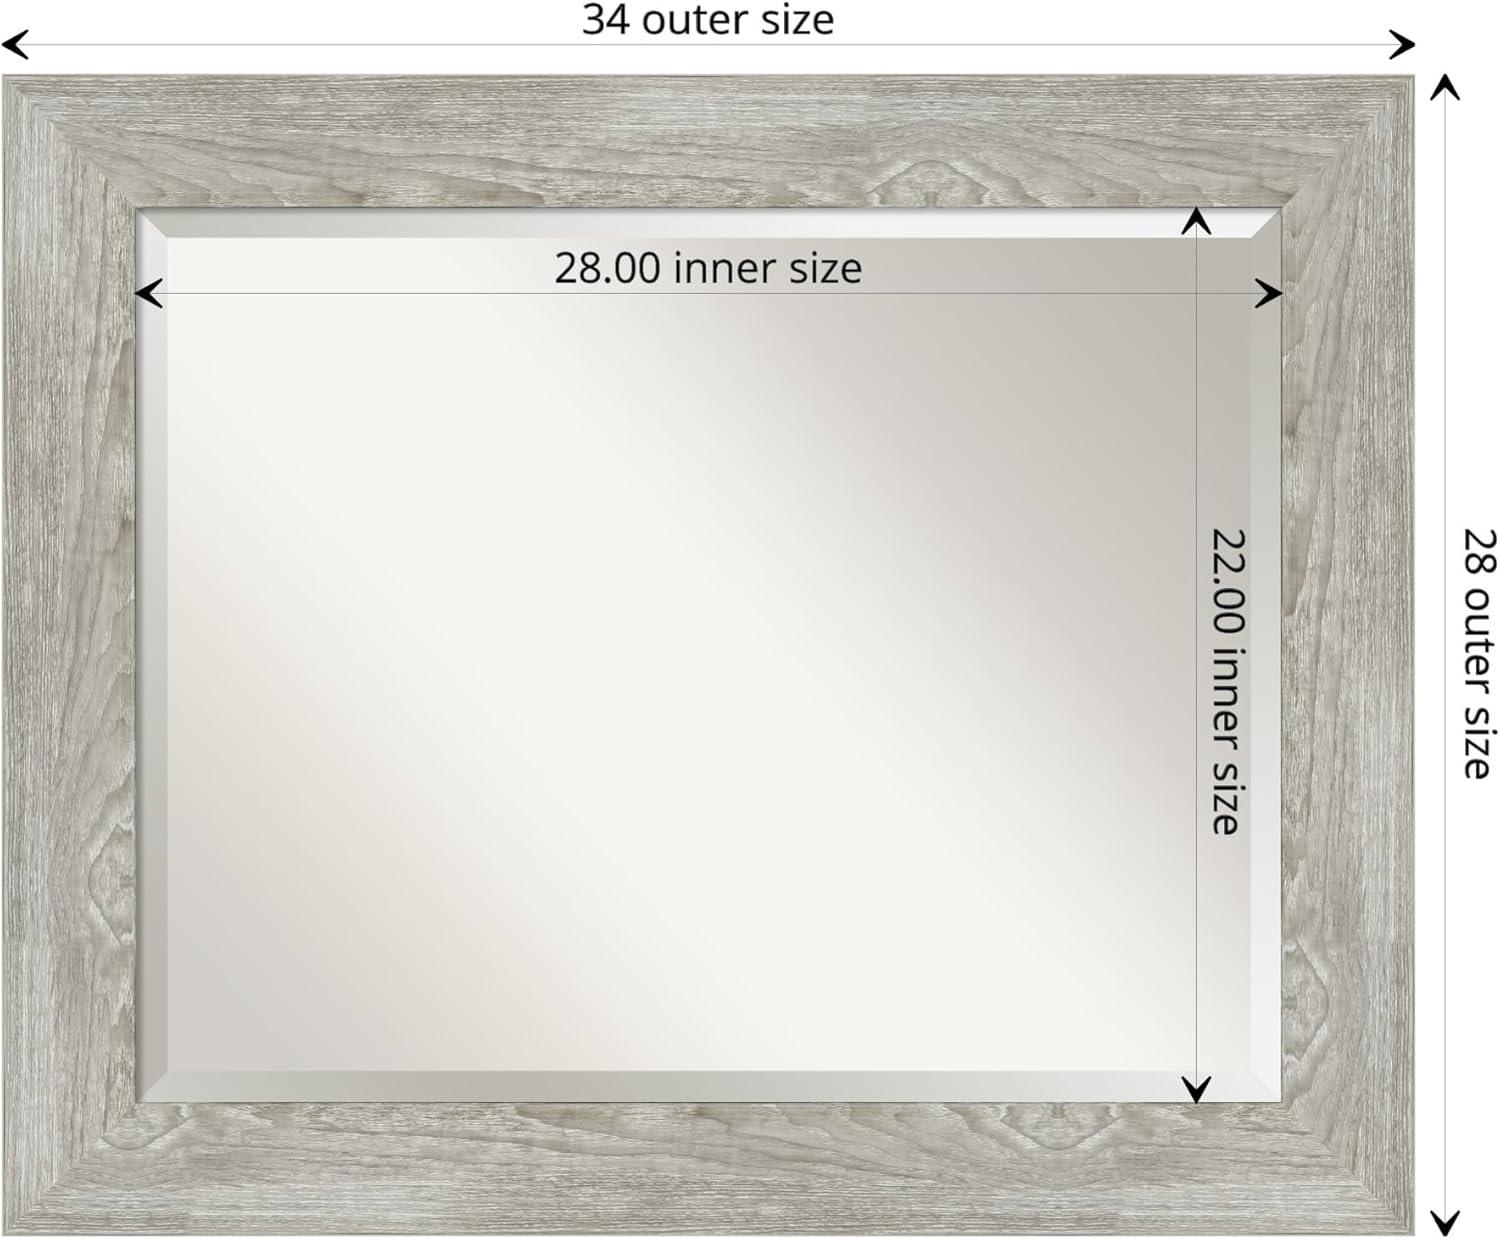 Dove Greywash Rectangular Wood Bathroom Vanity Mirror